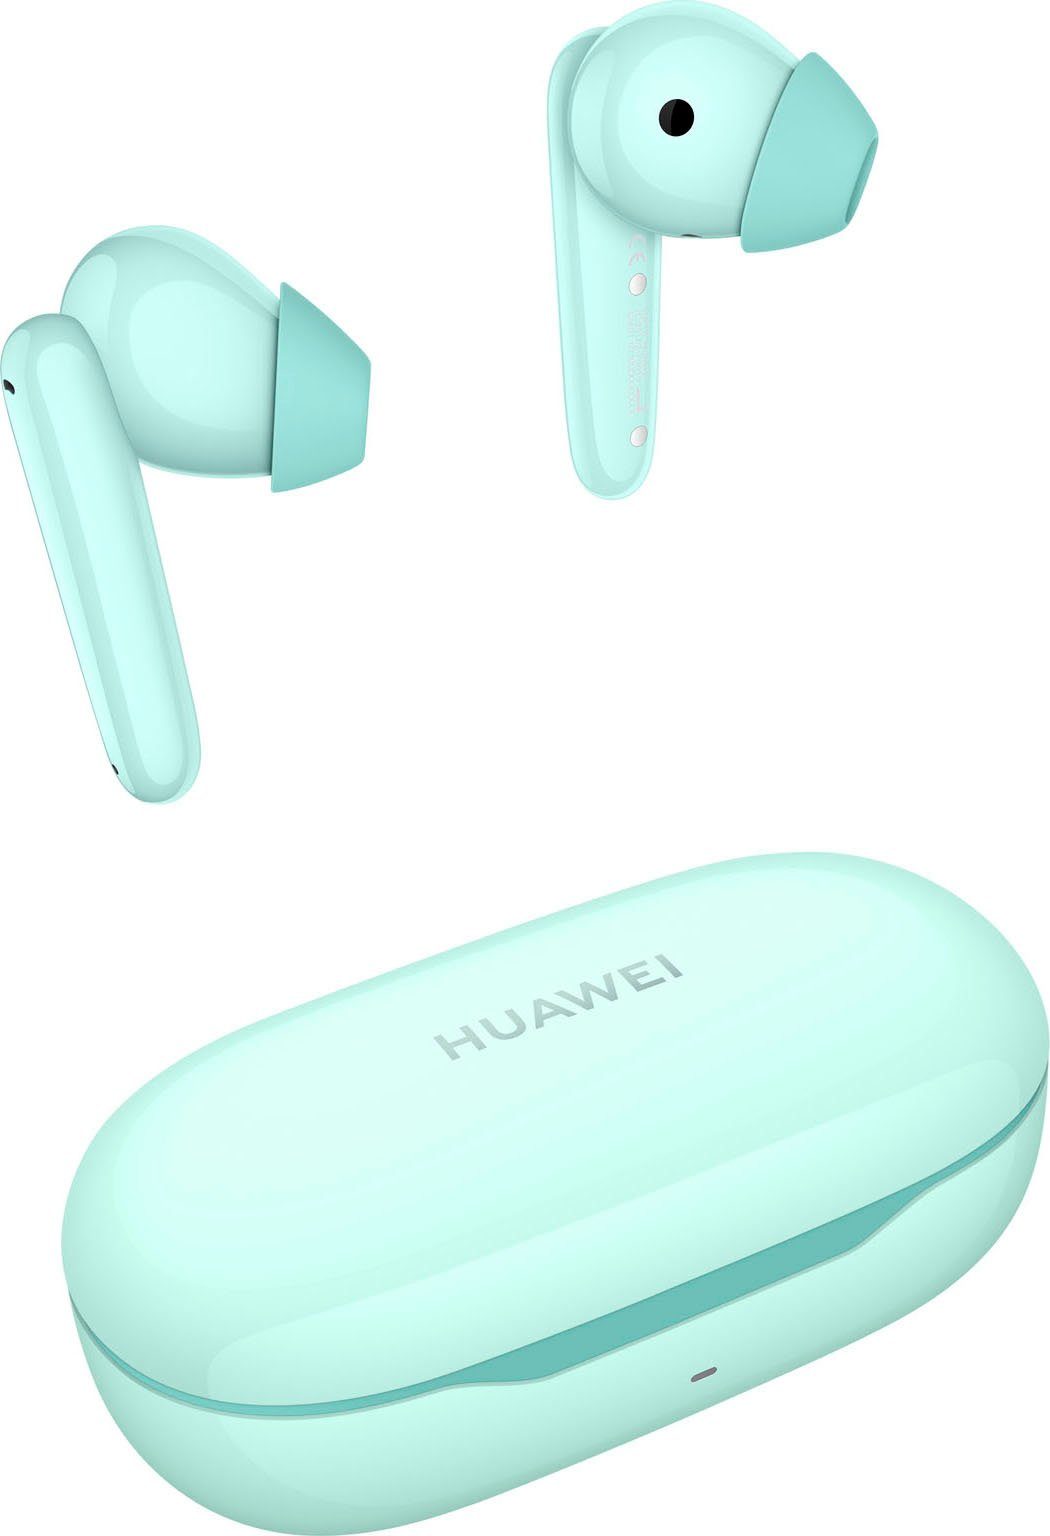 Huawei FreeBuds SE wireless In-Ear-Kopfhörer (Premium-Design, Kristallklarer Sound, Lange Akkulaufzeit) Blau